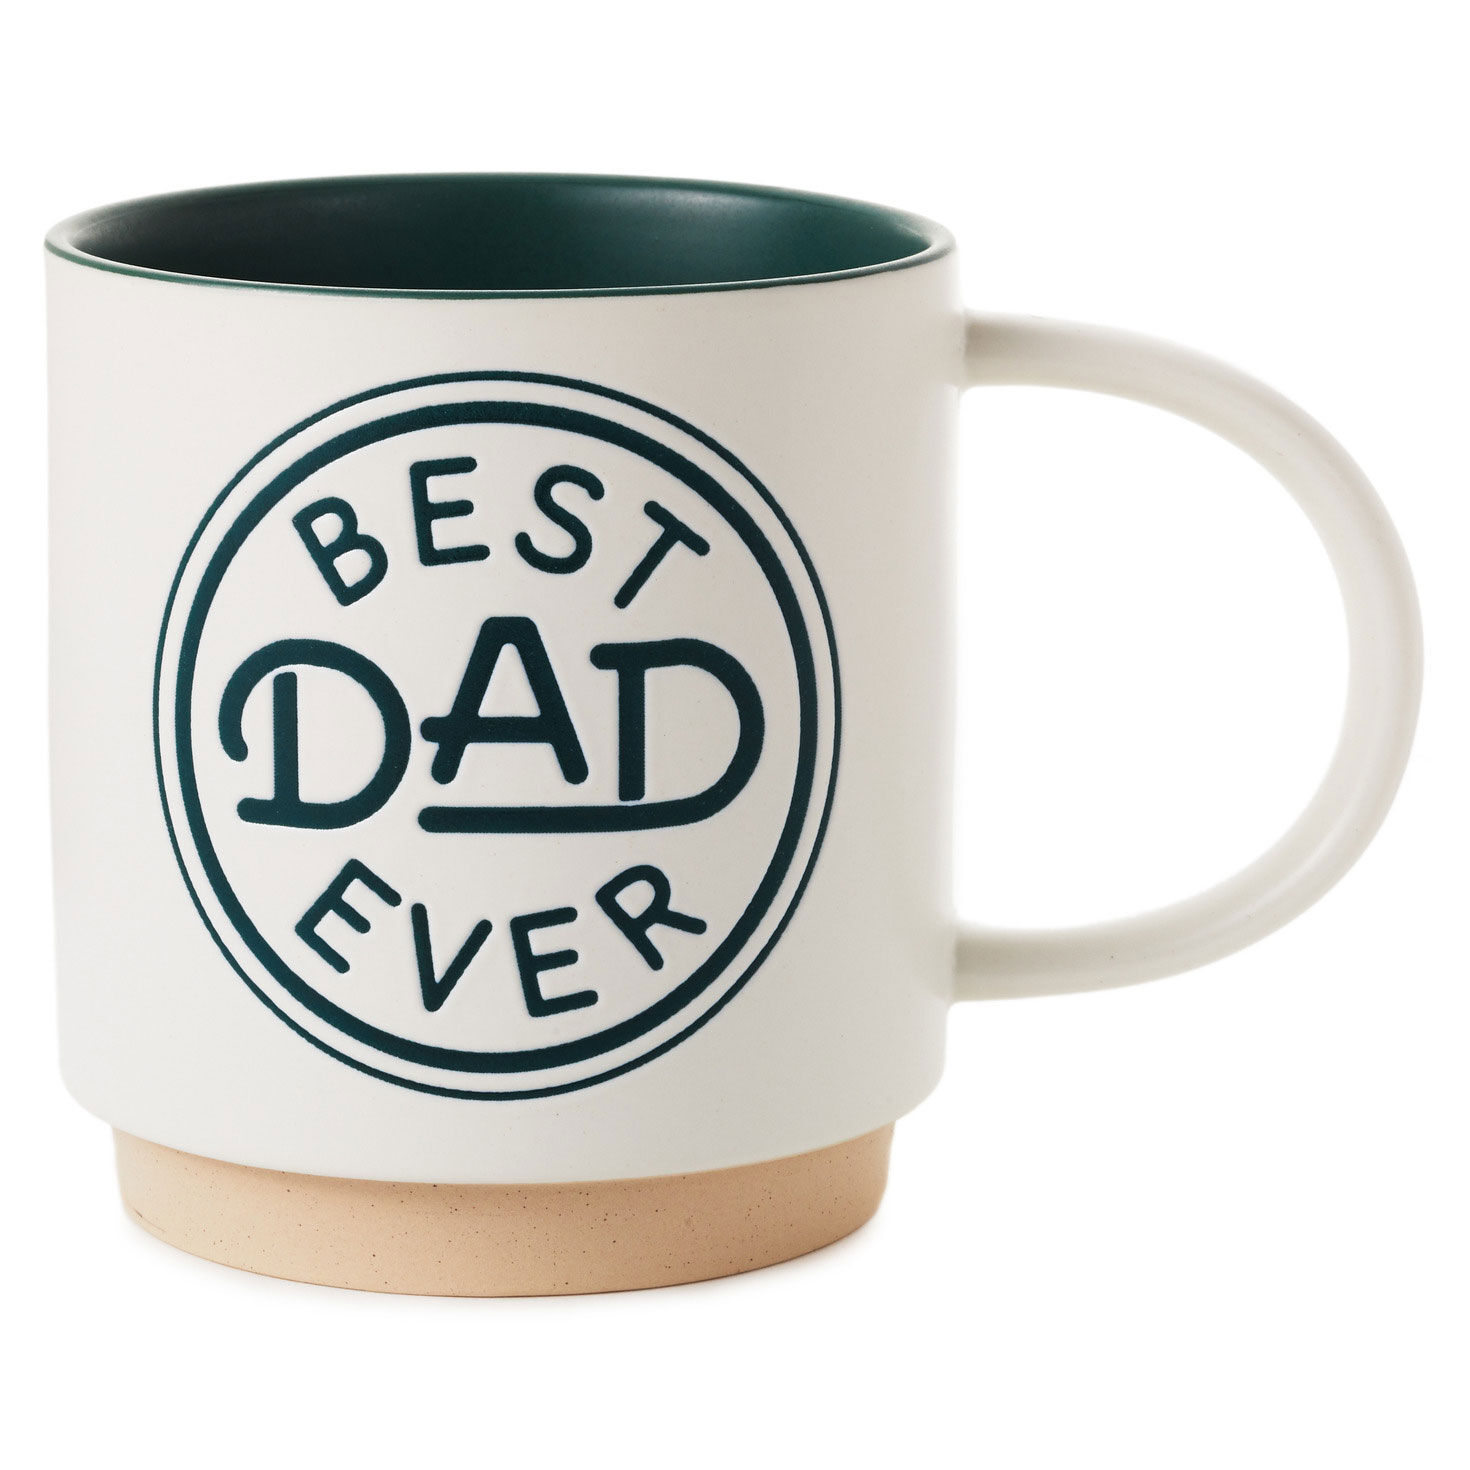 Best Dad Ever Mug, 16 oz. for only USD 16.99 | Hallmark